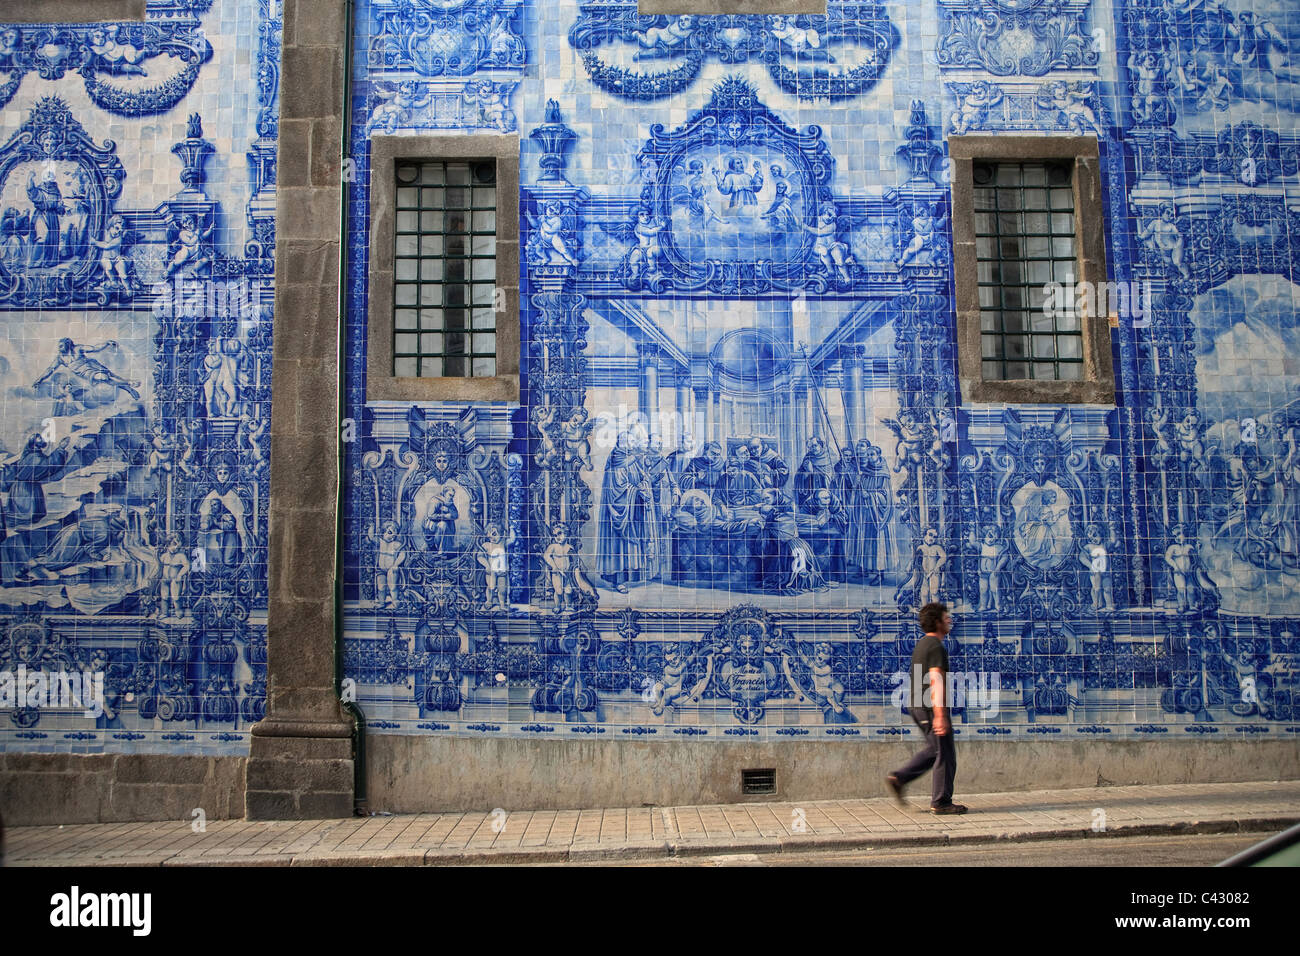 Capela das Almas, Porto Old Town (UNESCO World Heritage), Portugal Stock Photo